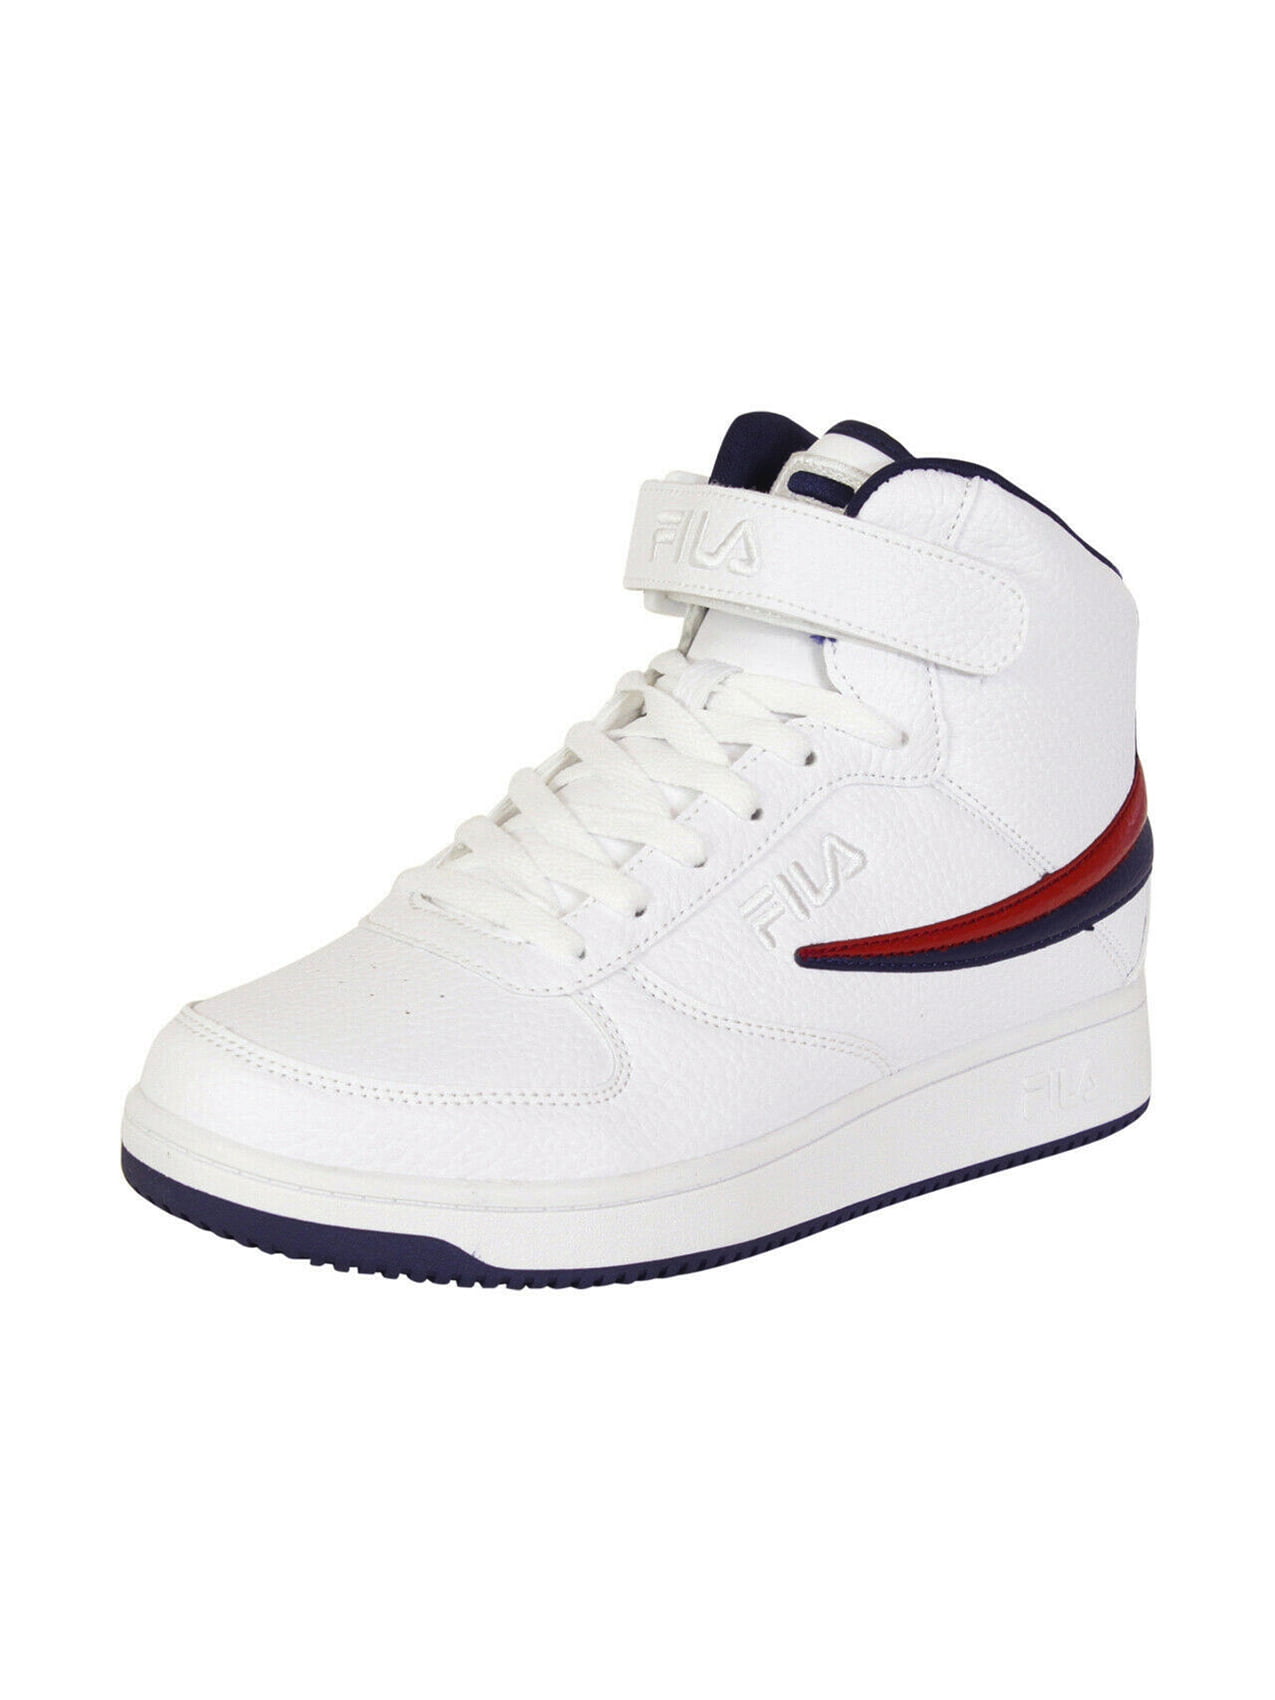 Fila A-High Leather Sneakers Top White - Walmart.com